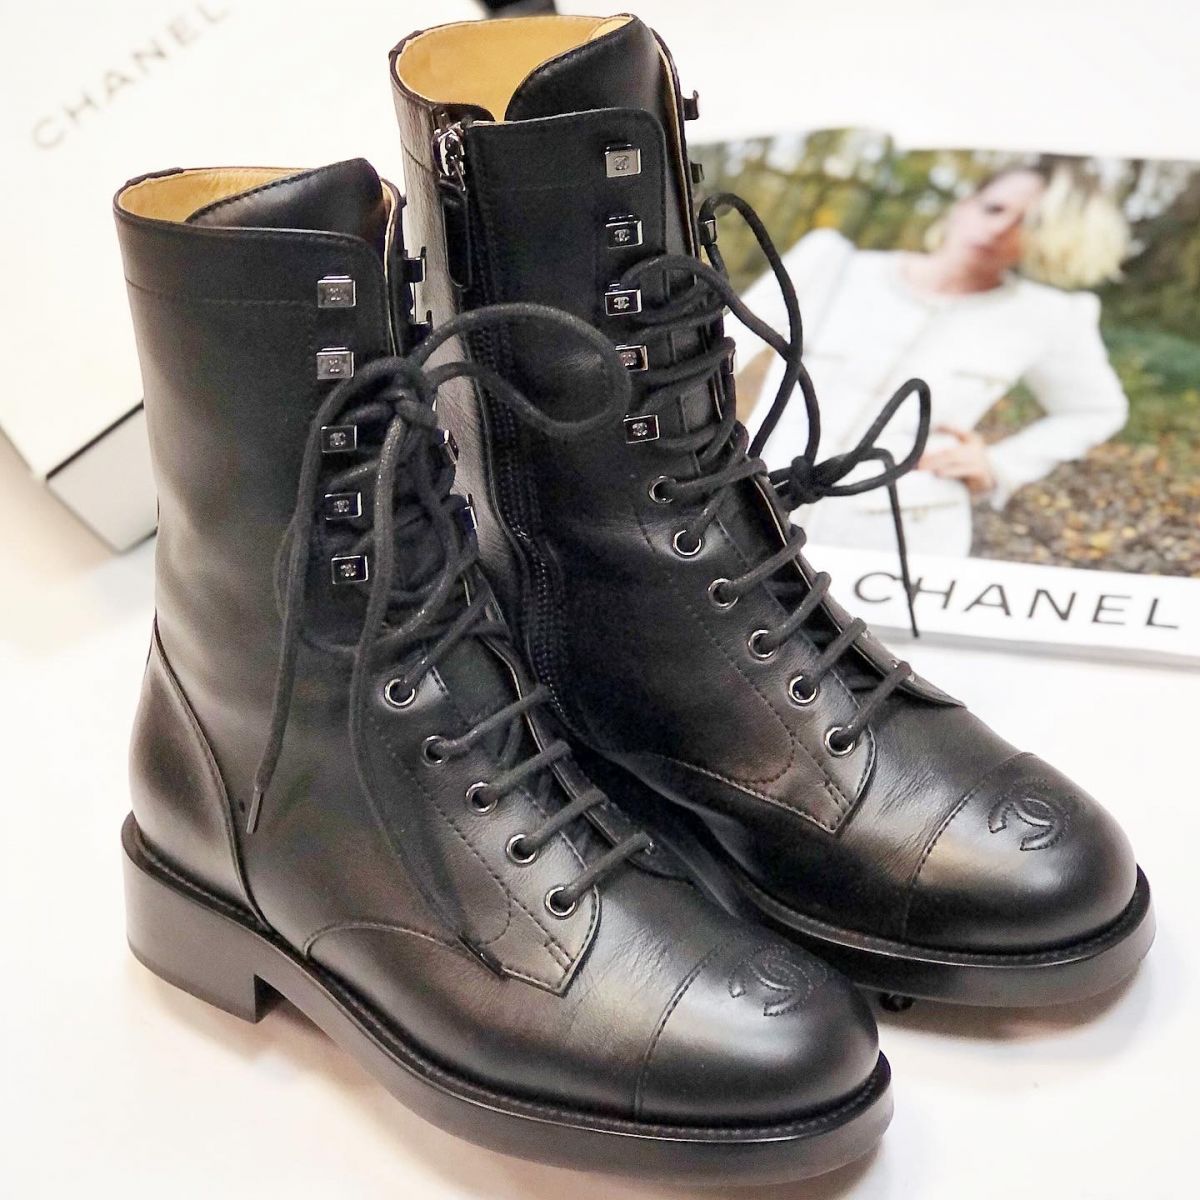 Ботинки Chanel  размер 37.5 цена 53 847 руб